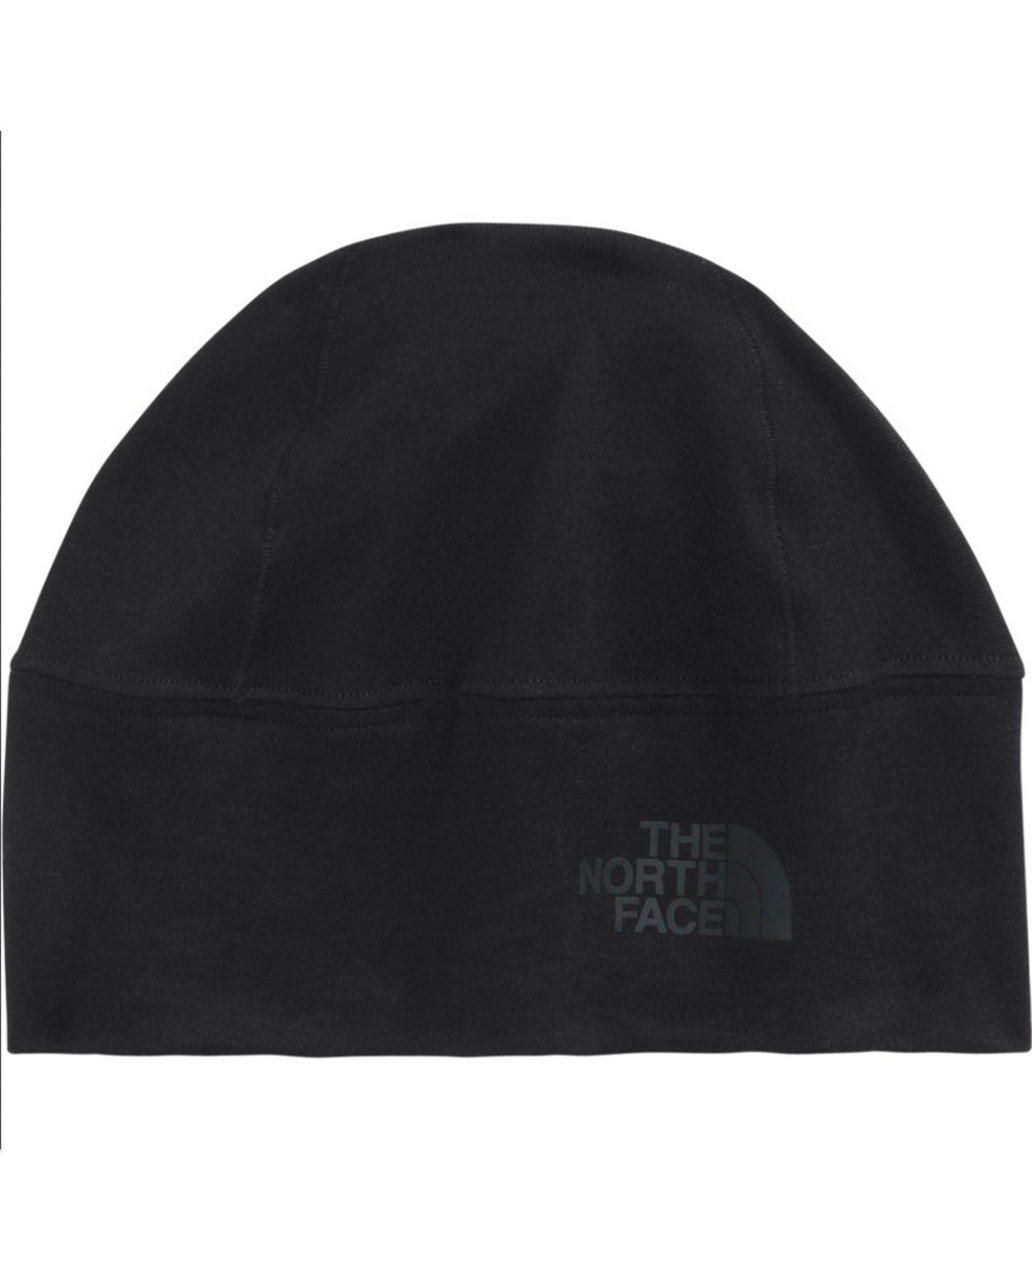 Shop The North Face TNF Wool Under Helmet Skully | Bivouac Ann Arbor